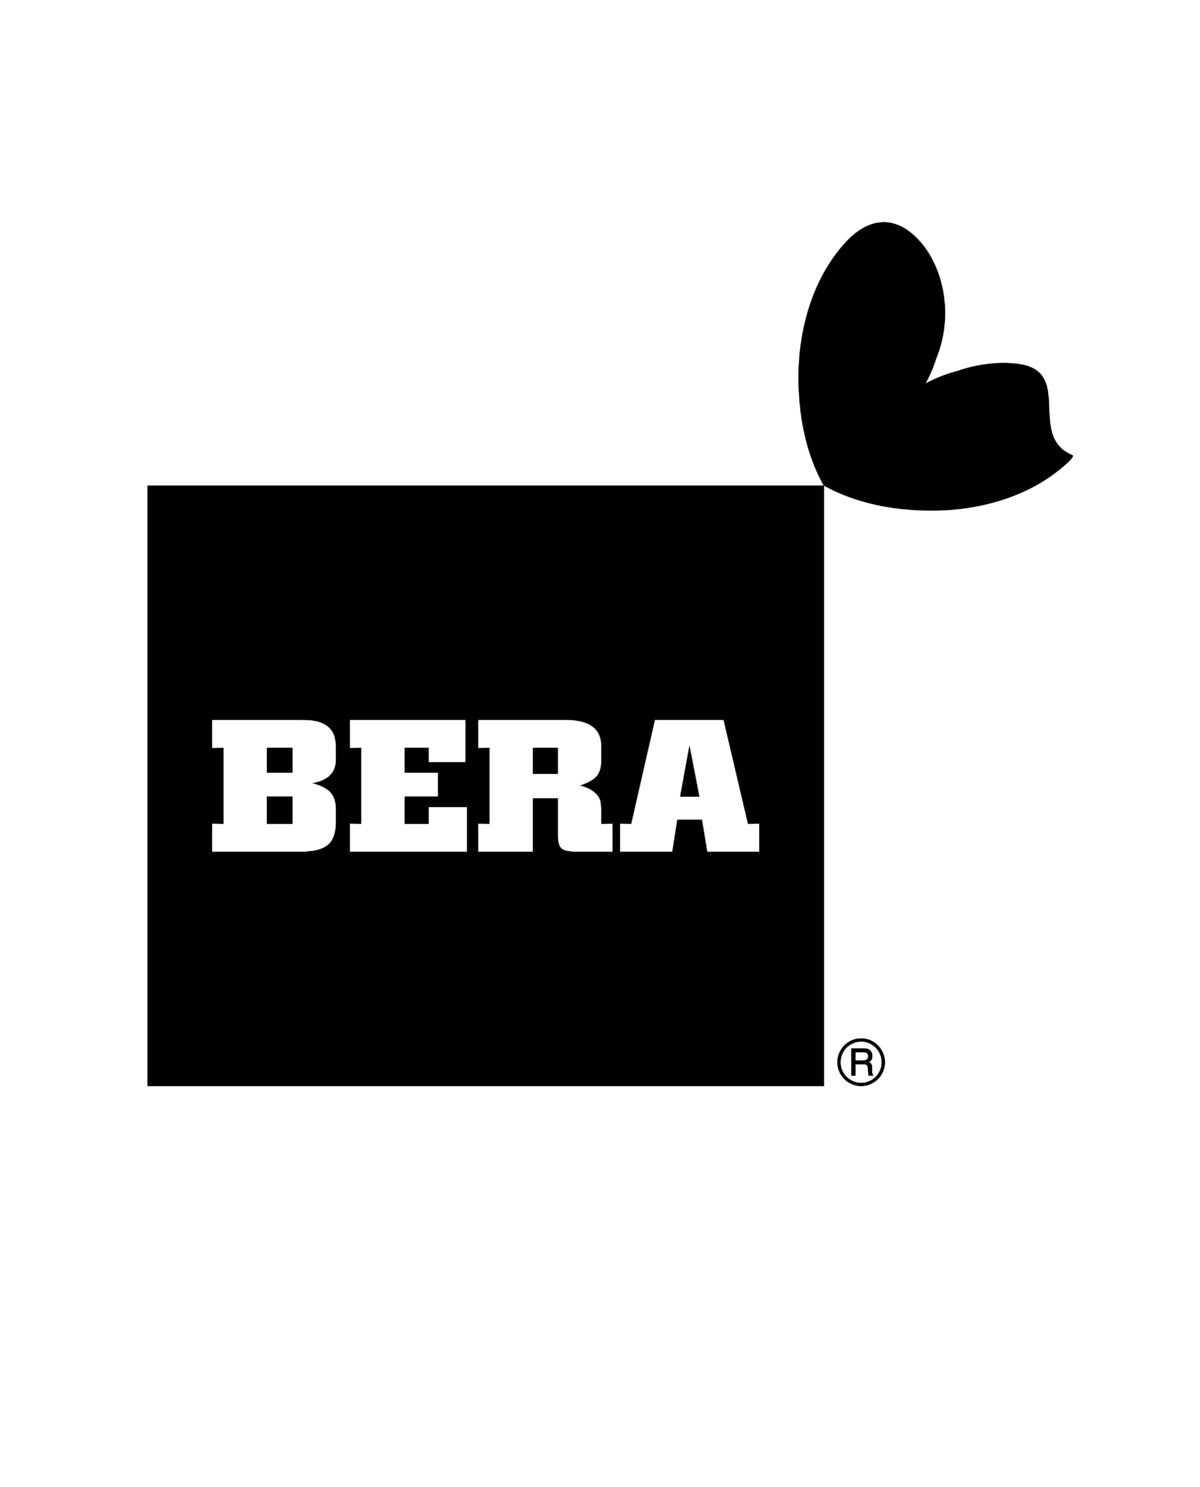 BERA Slovakia